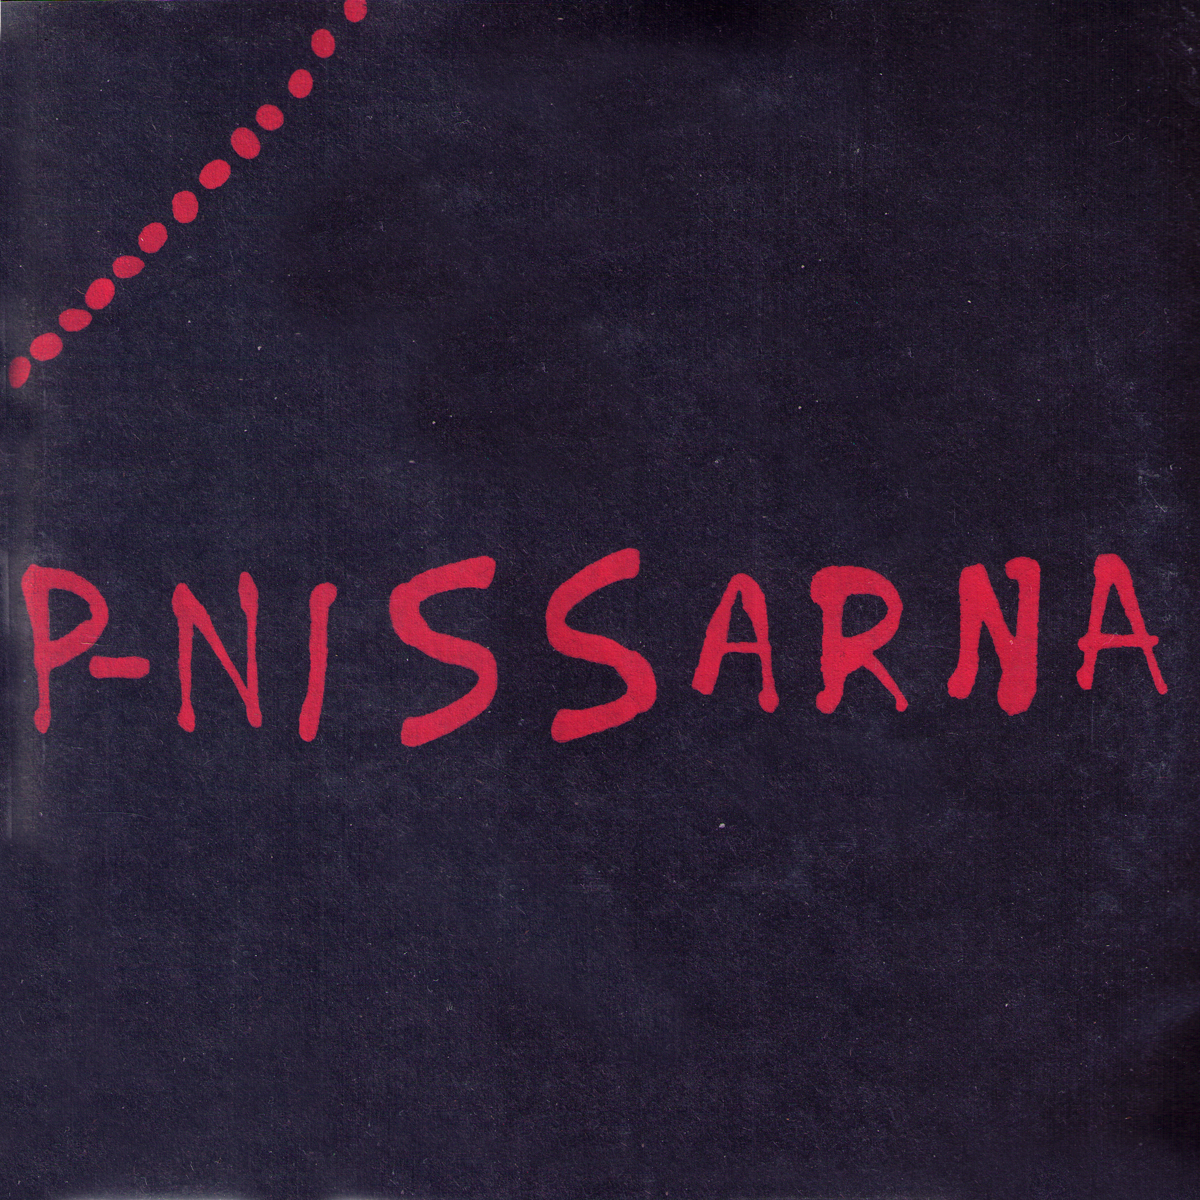 P-Nissarna- Jugend 7" ~REISSUE / RARE 1980 RECORDINGS!